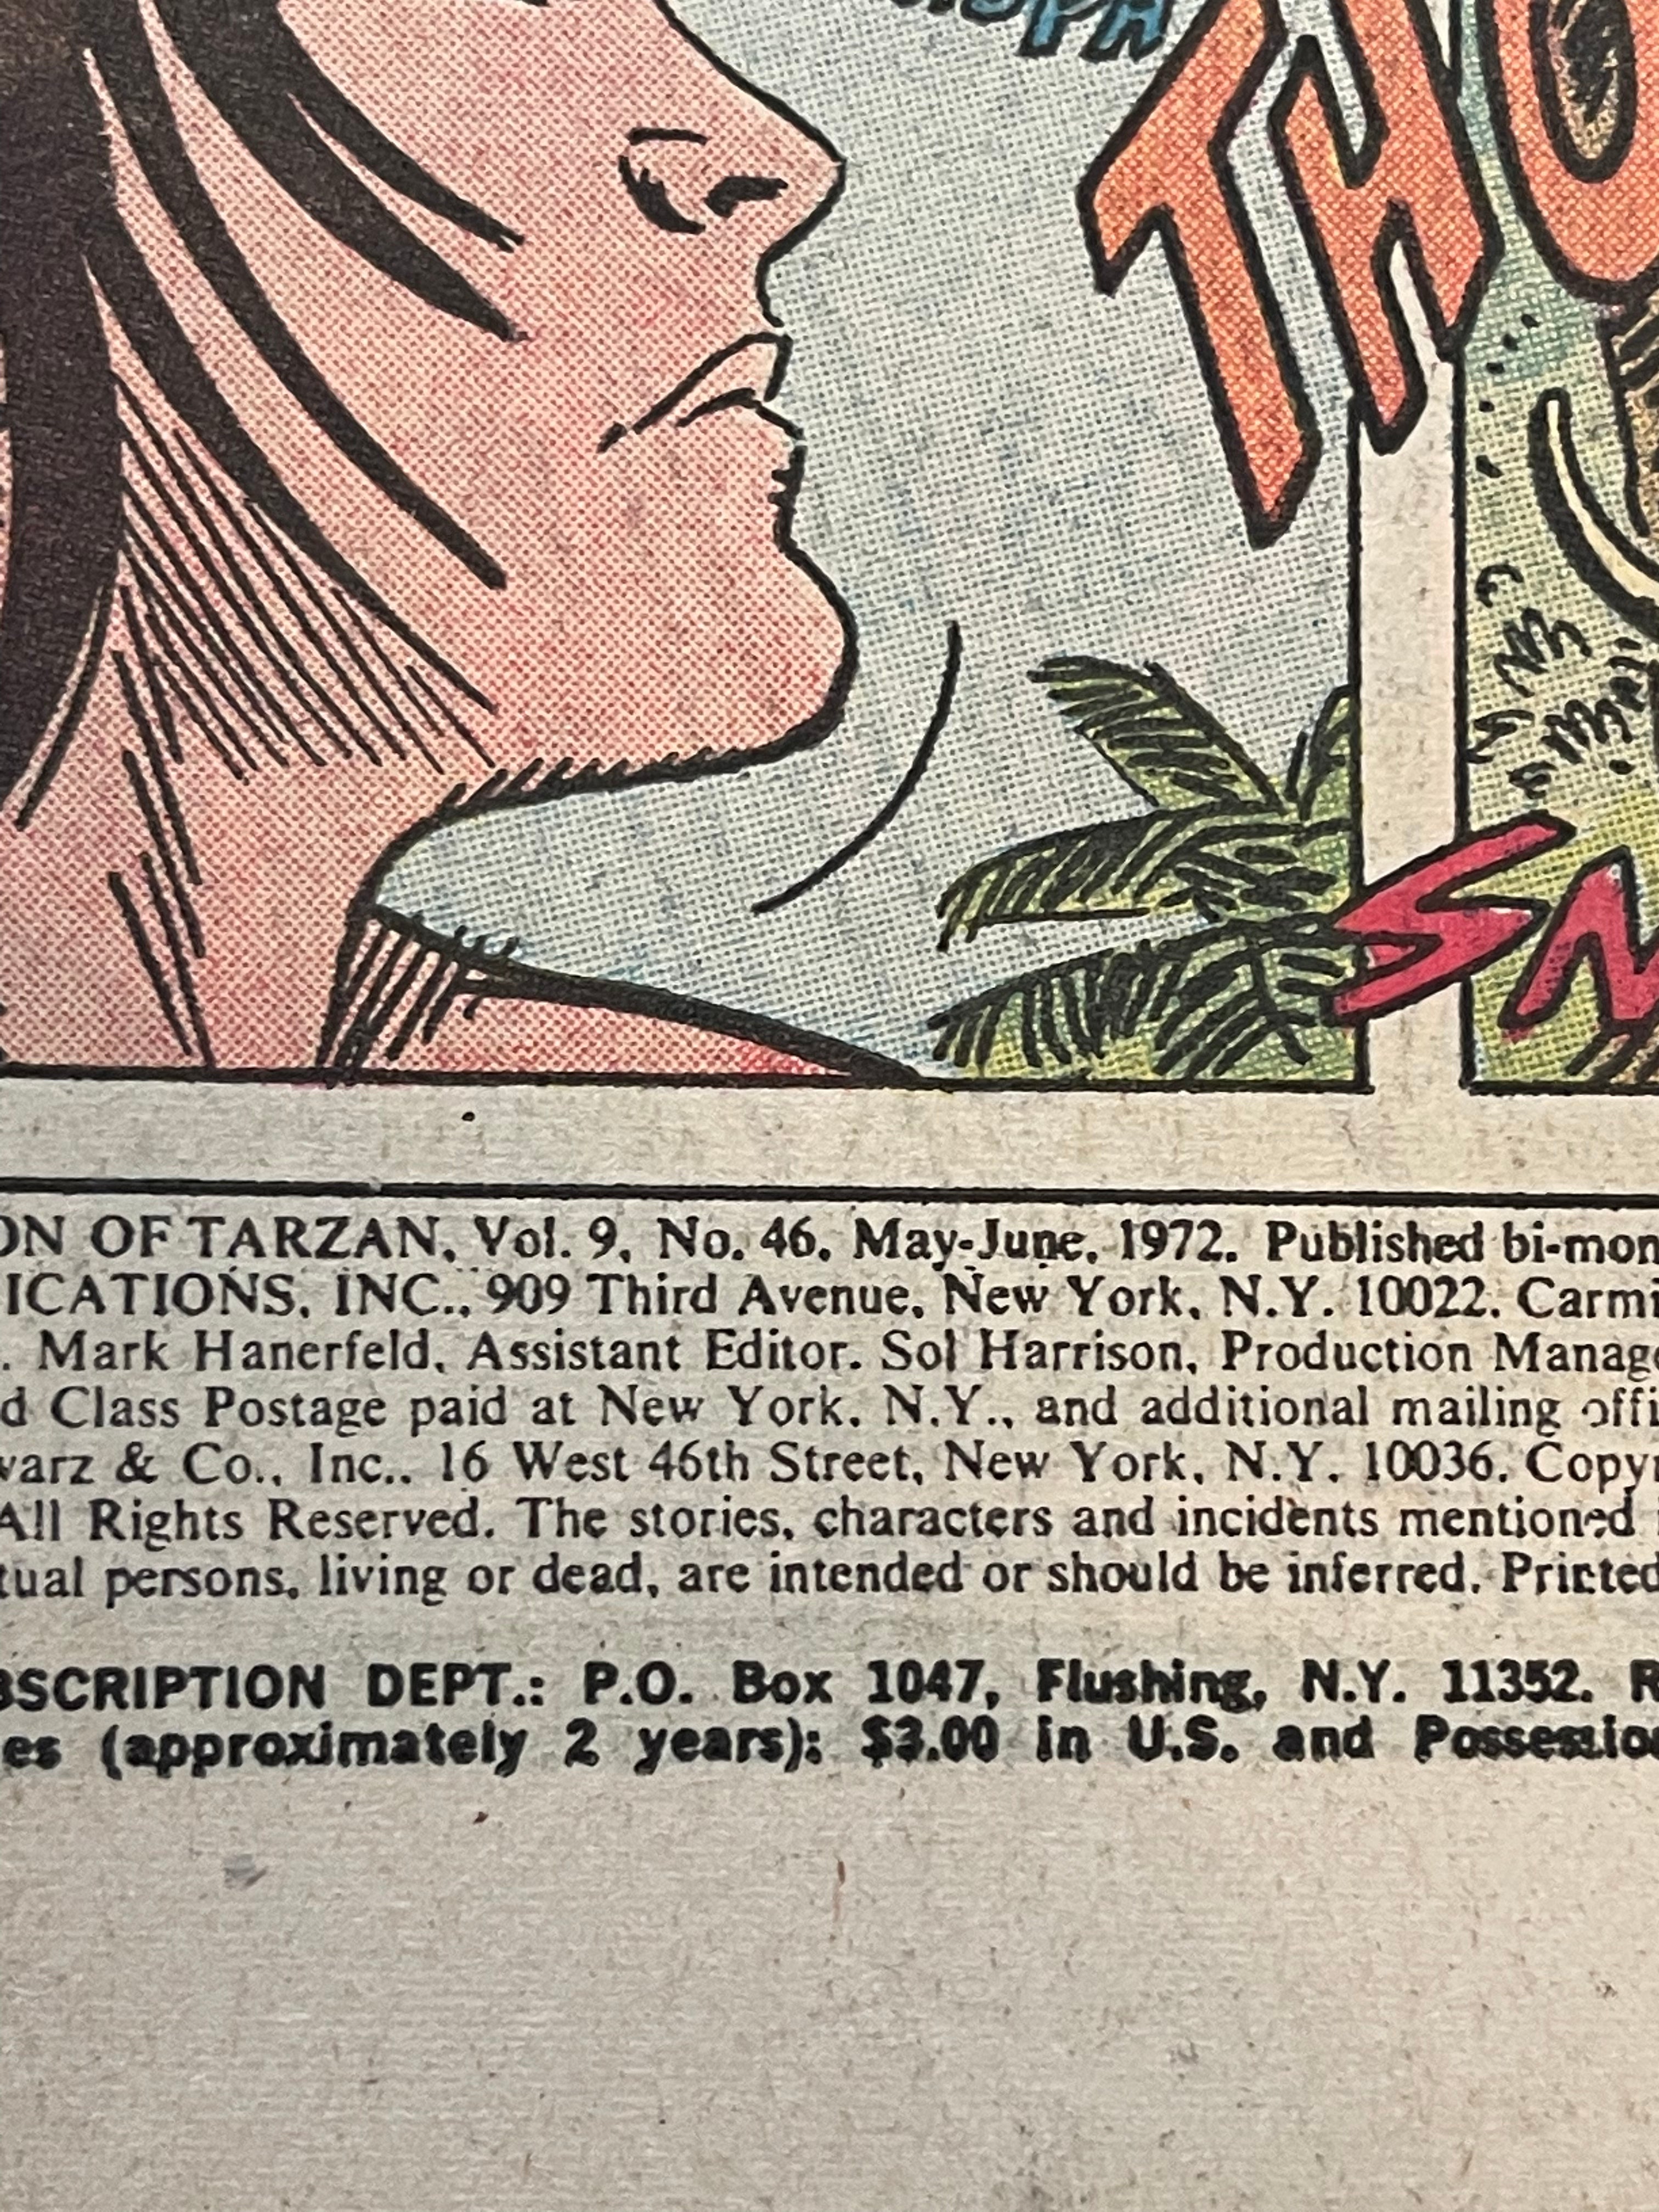 Korak Son of Tarzan #1 high grade comic book 1971